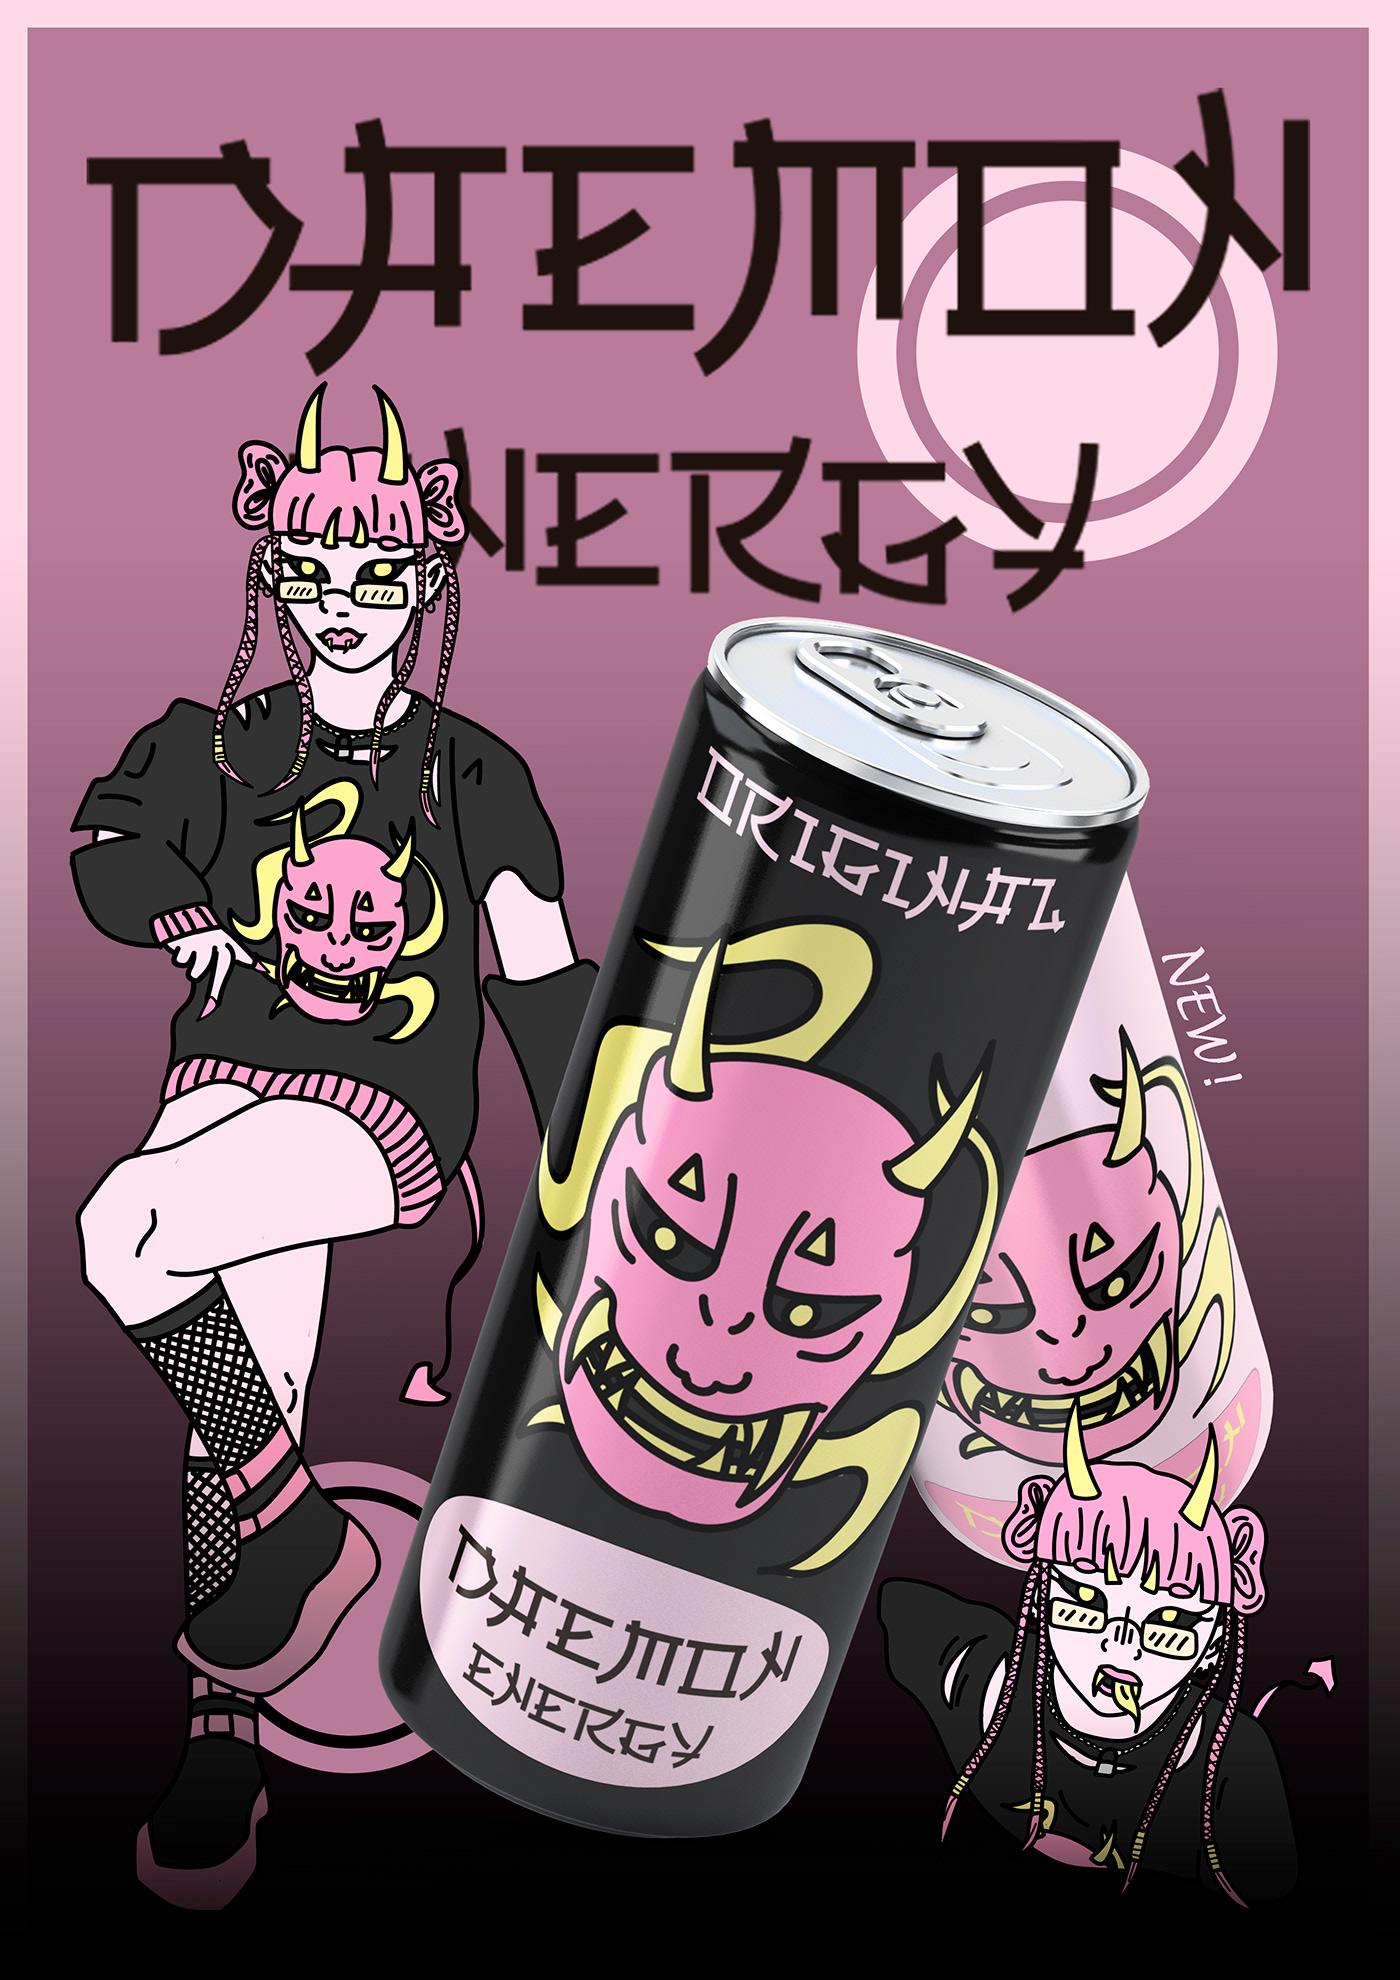 daemon energy drink can Mockup Character design  oc digital illustration Drawing  energetic drink